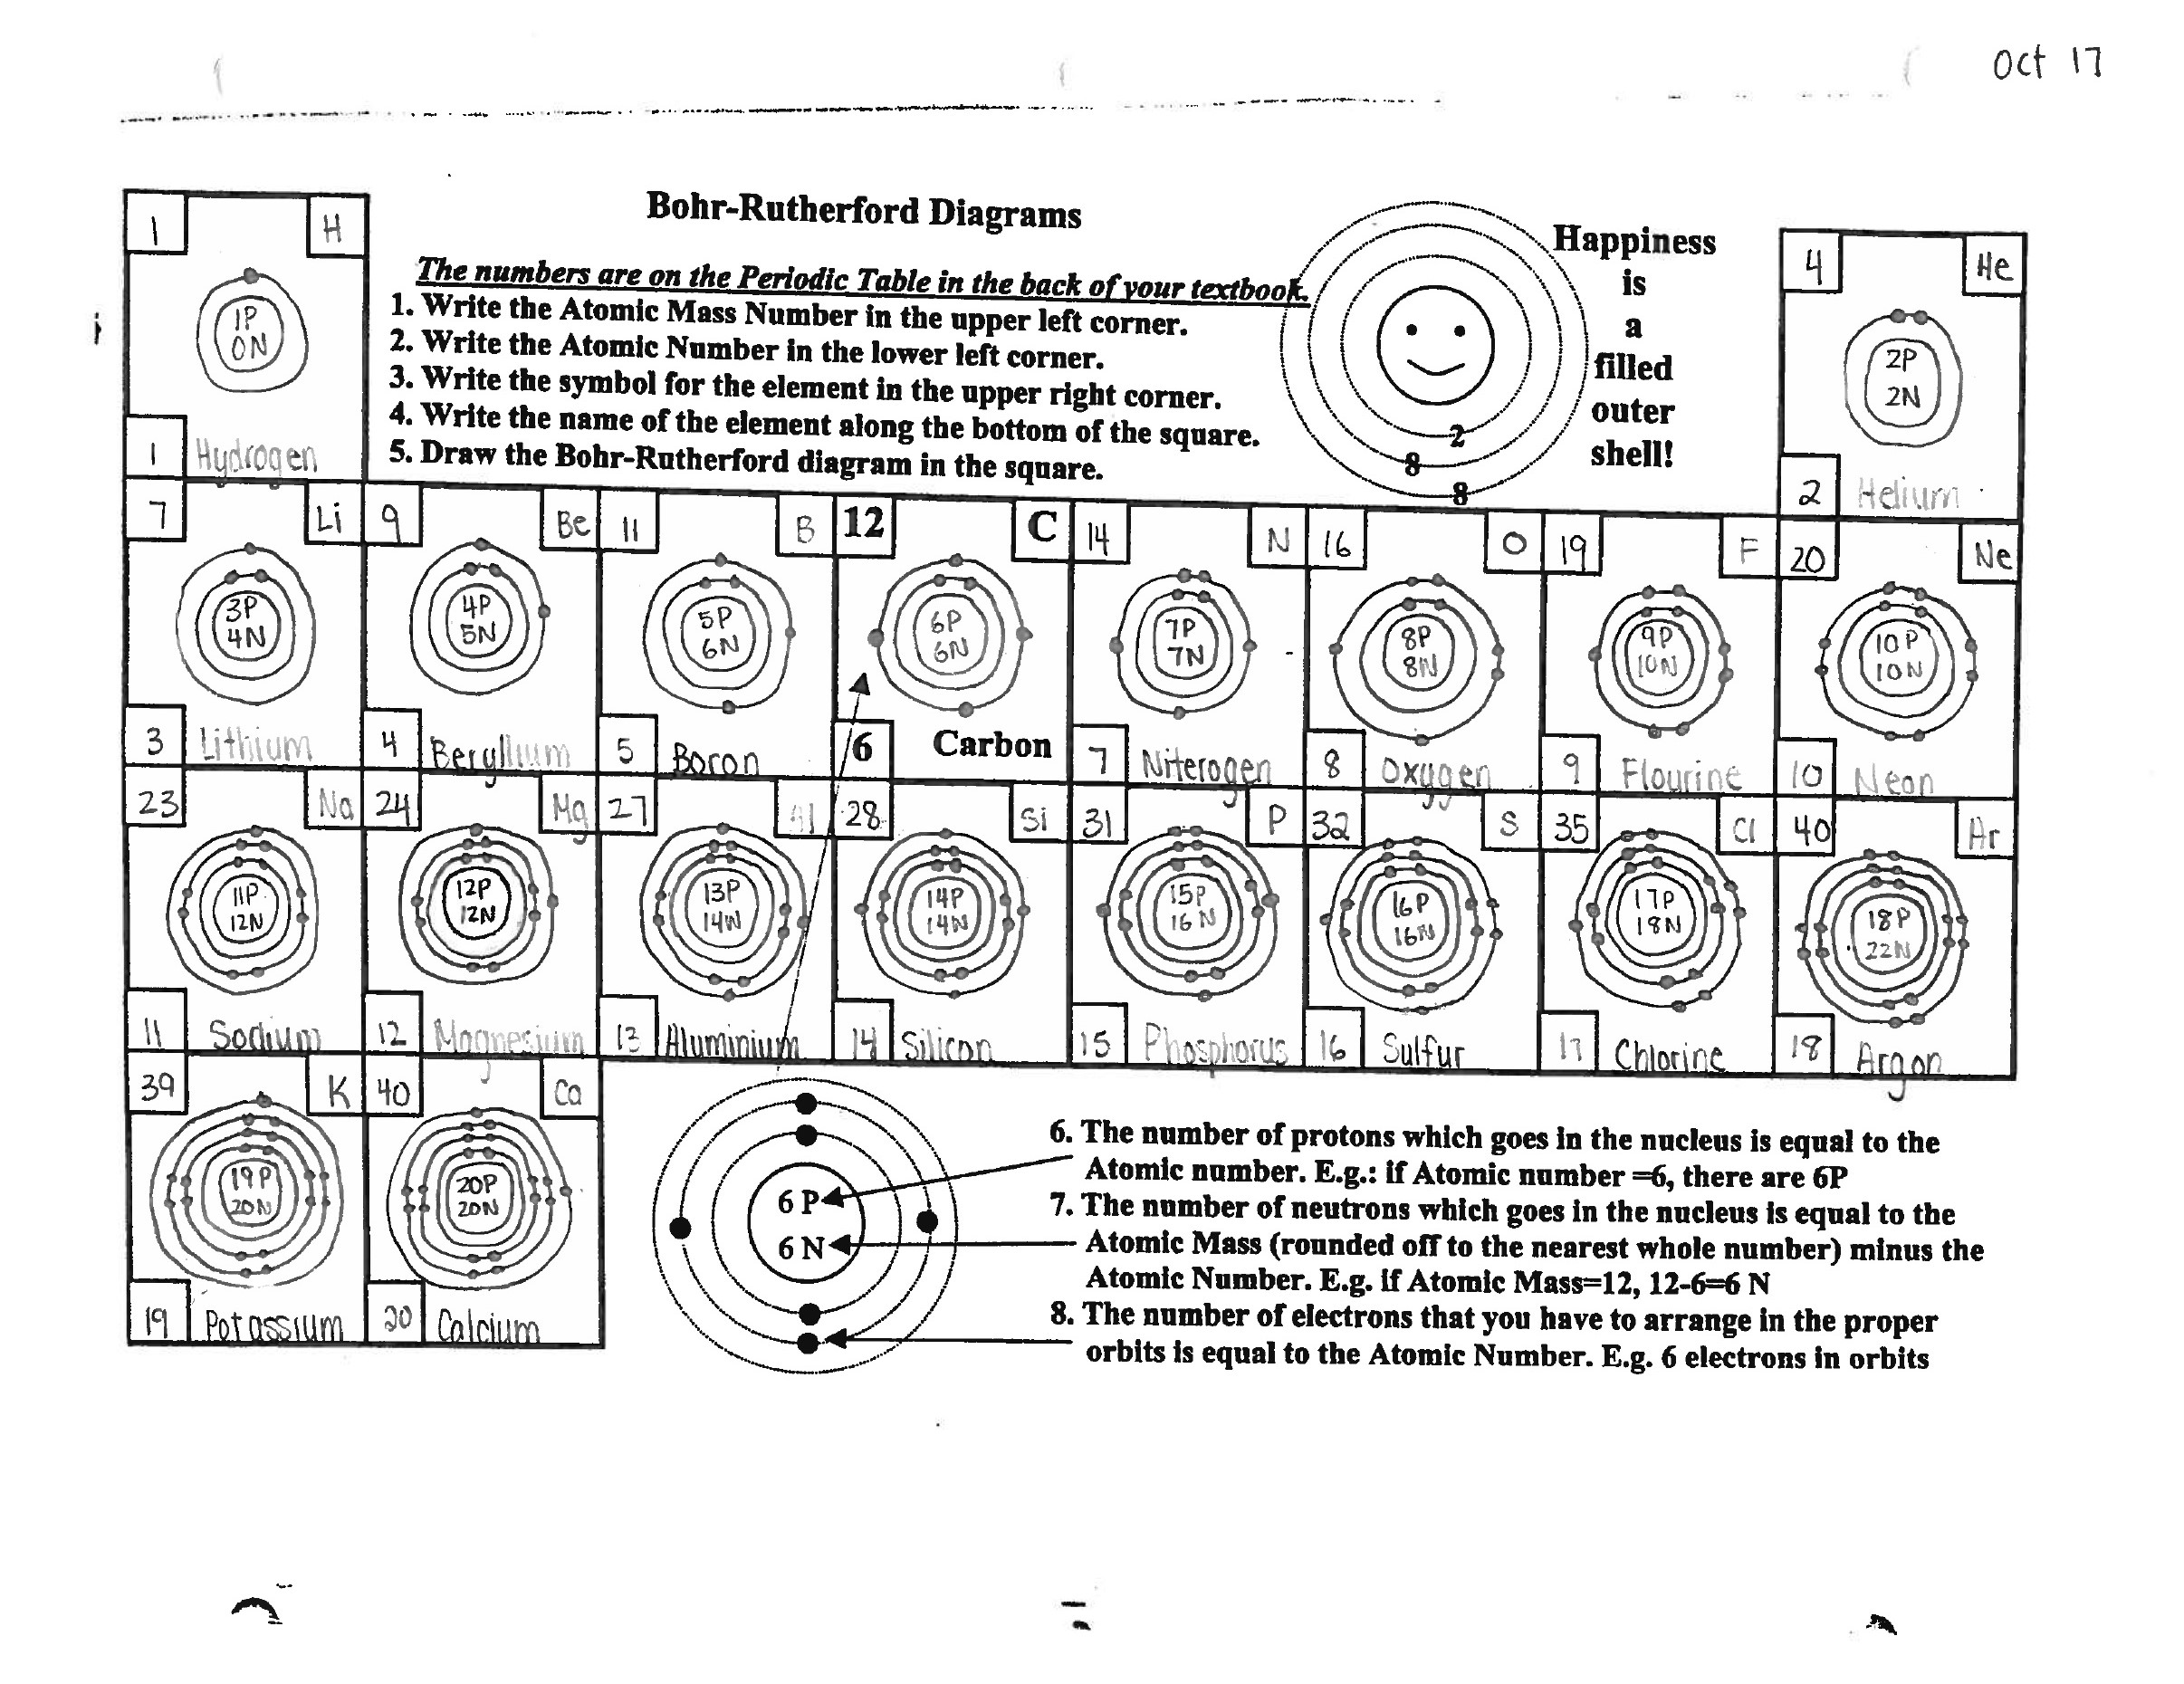 Bohr Model Diagrams Worksheet Answers - Nidecmege Regarding Bohr Atomic Models Worksheet Answers